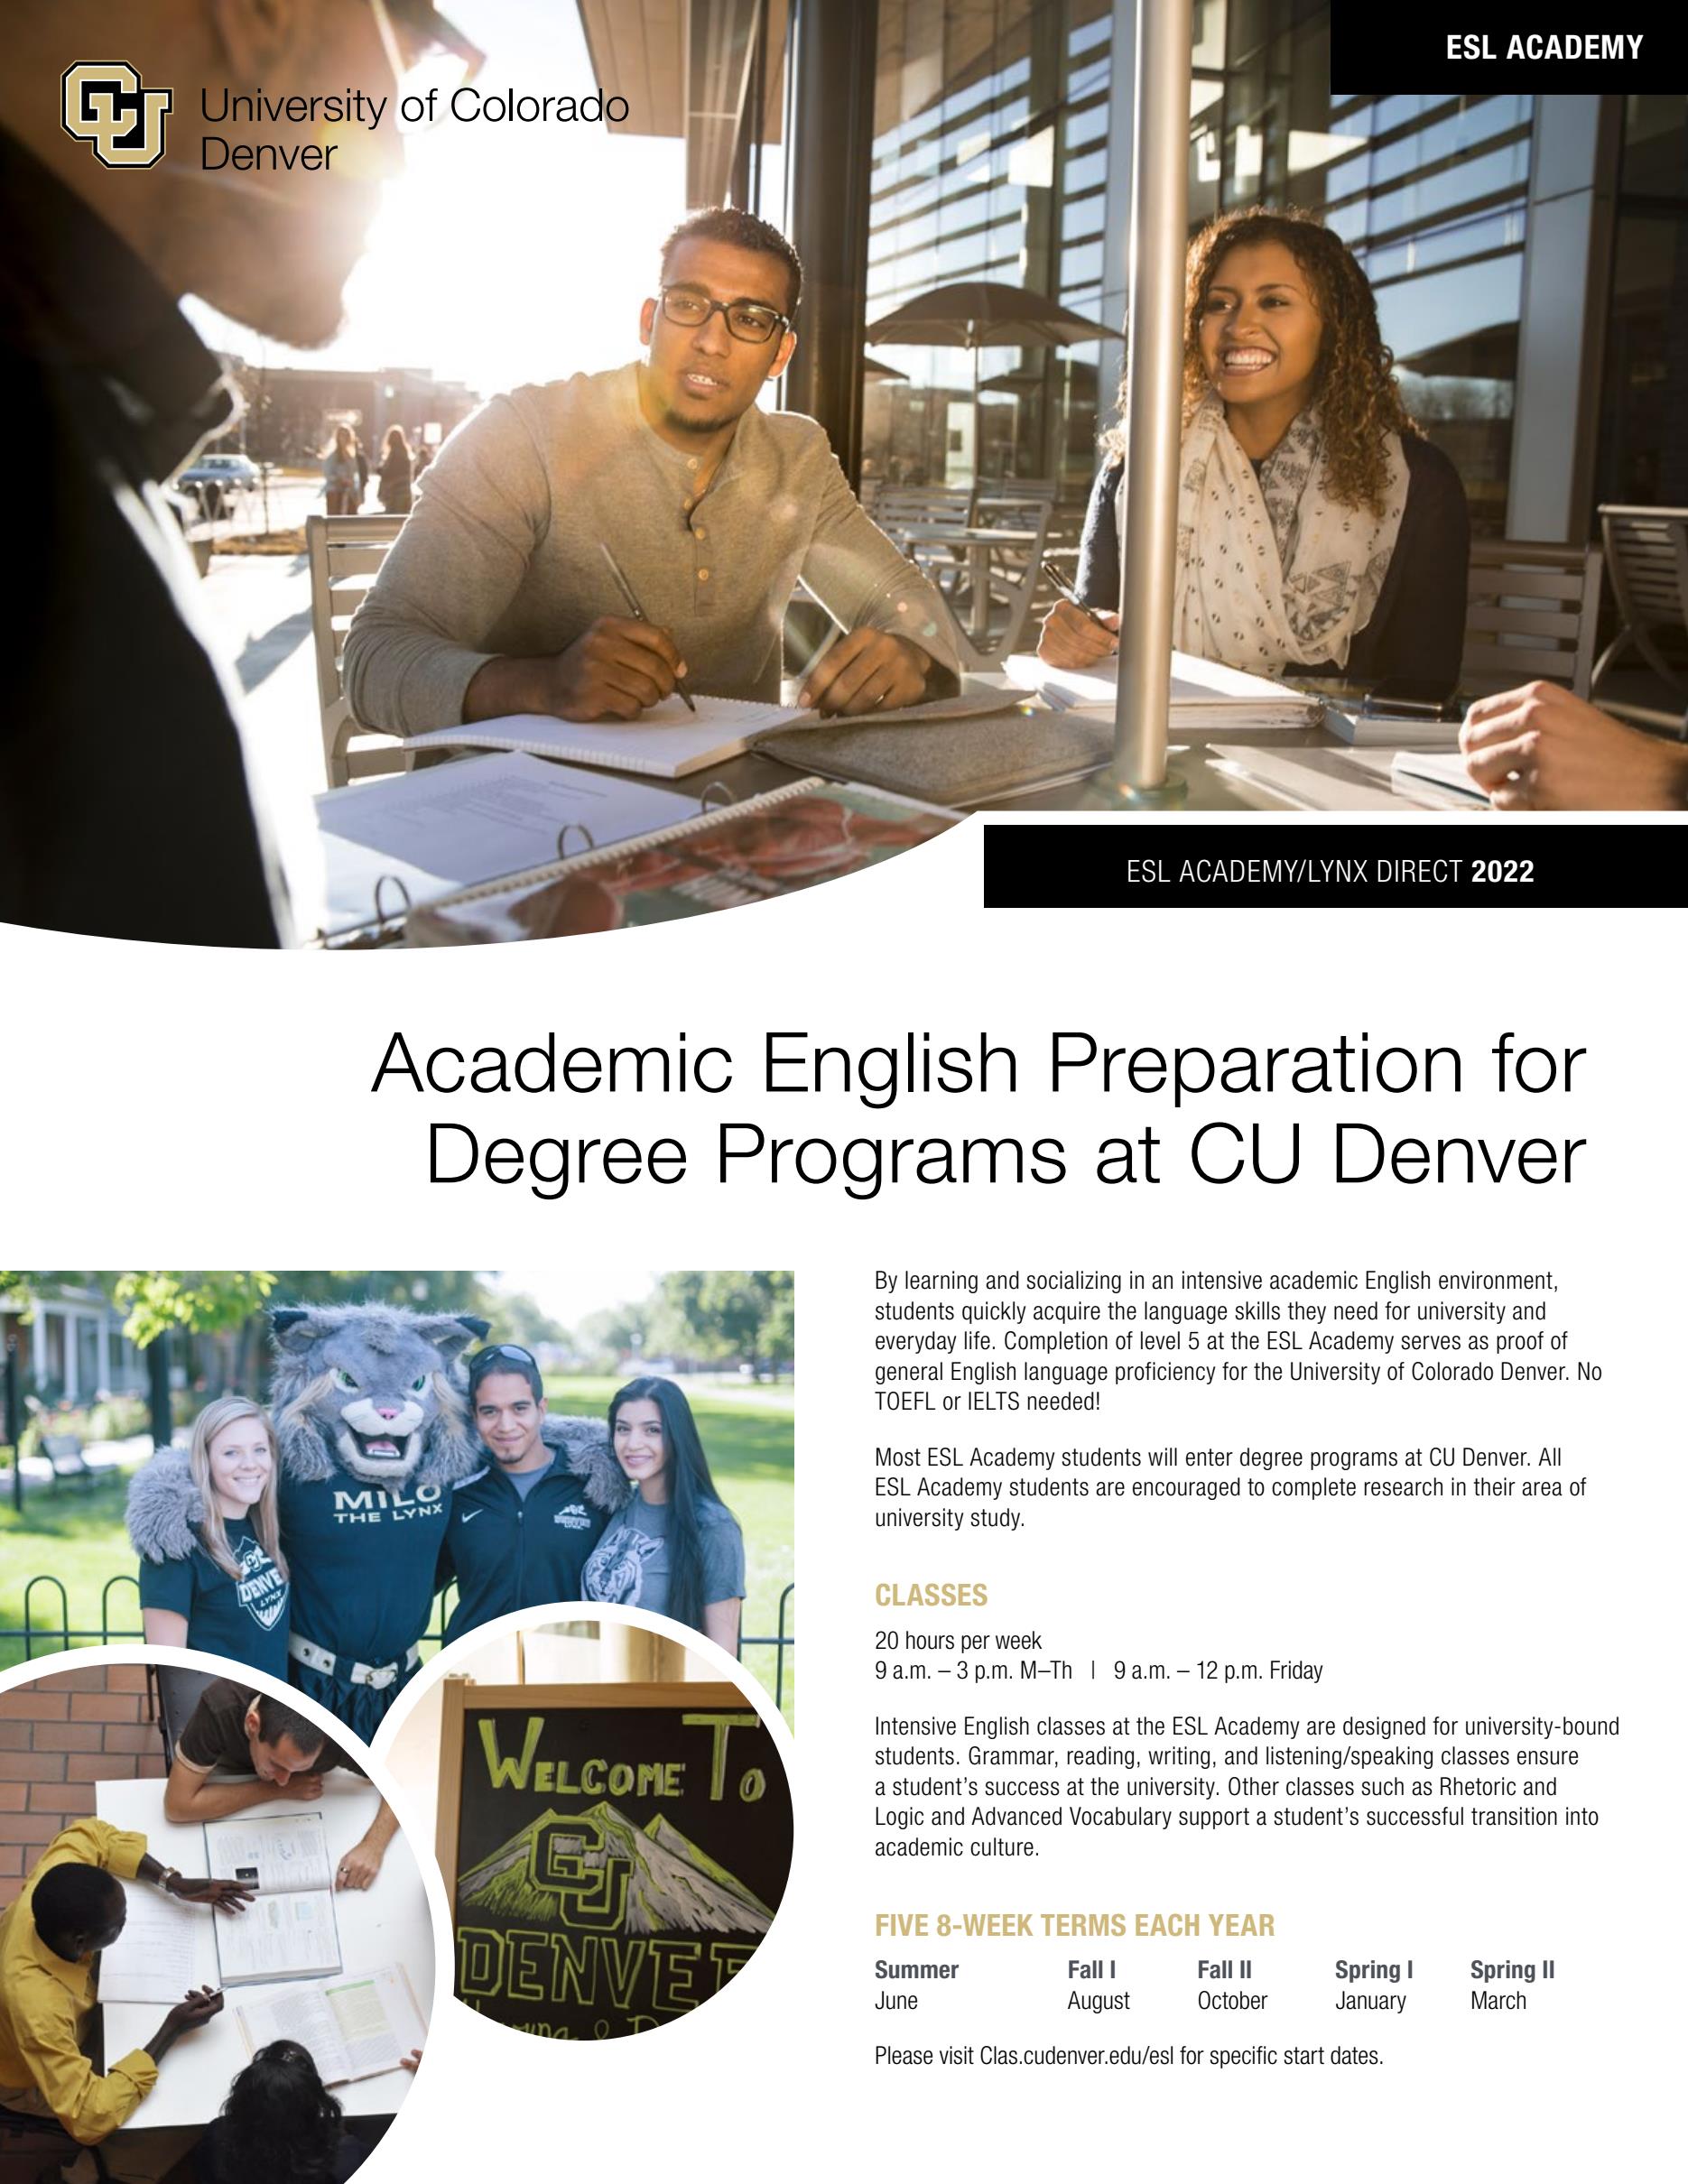 ESL Academy (Lynx Direct Pathway Program) Brochure